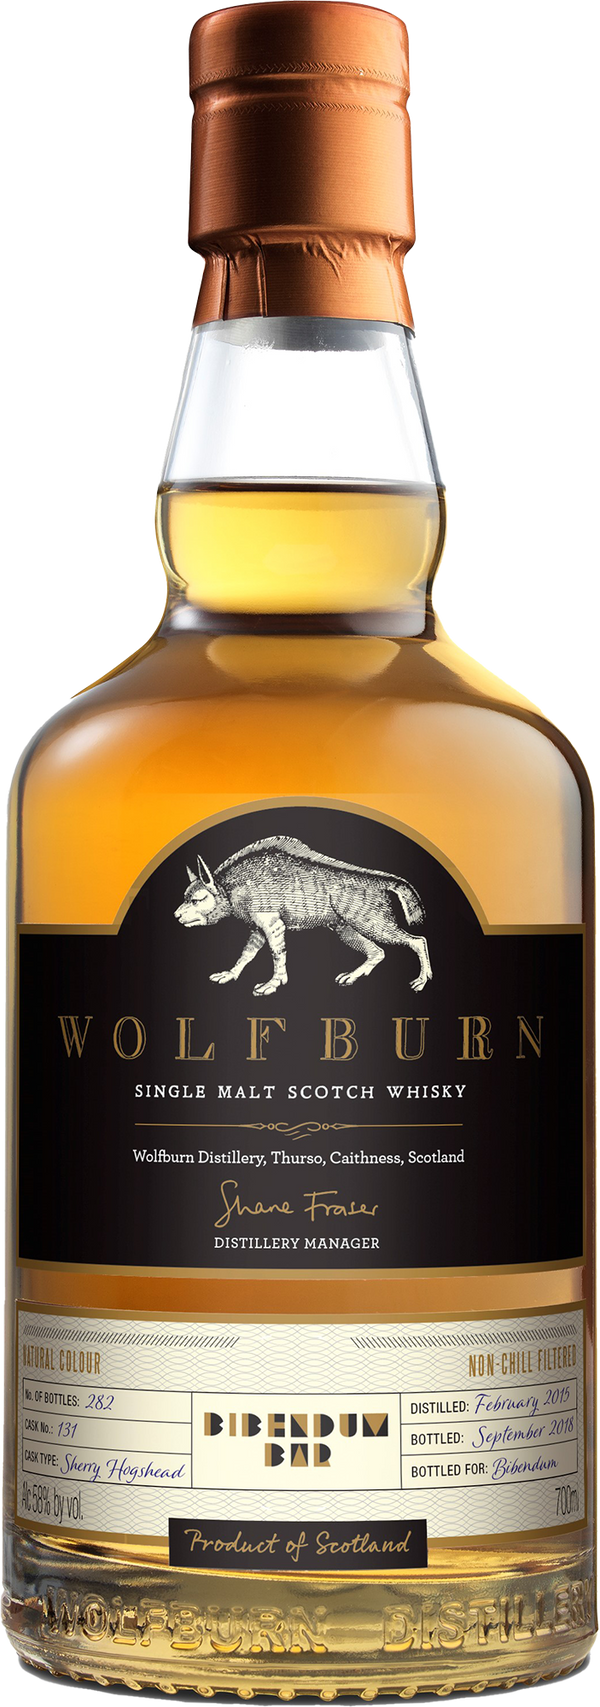 Wolfburn "Bibendum Bar" Barrel Single Malt Scotch Whisky